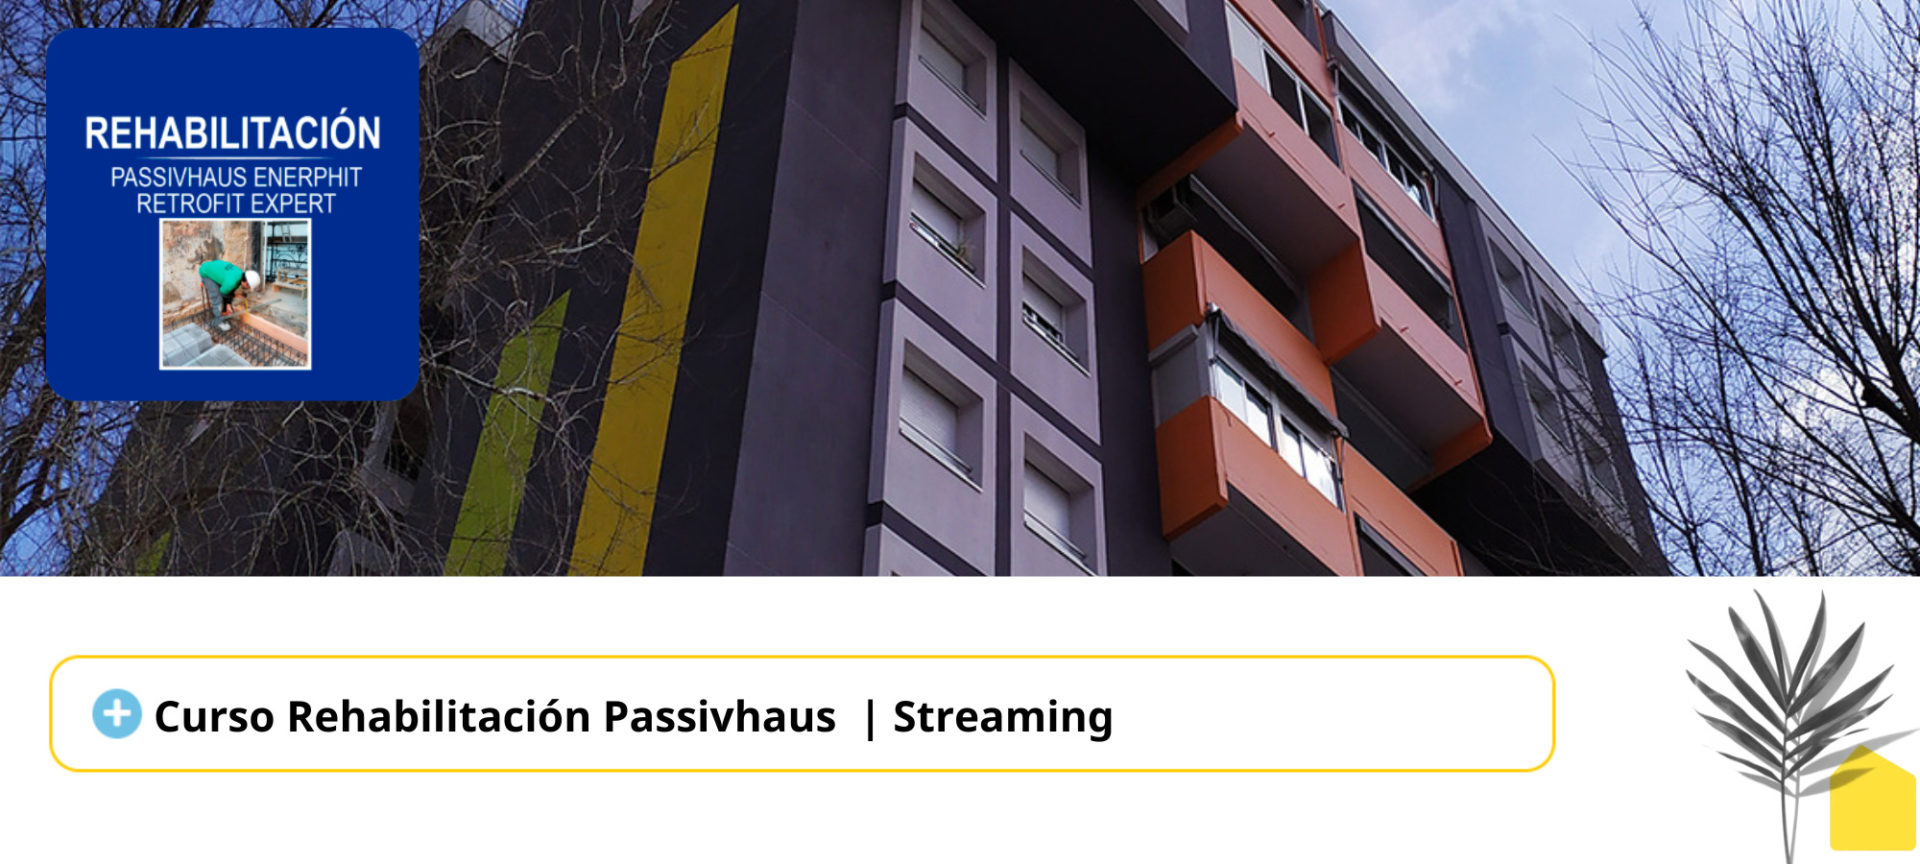 Curso Rehabilitación Passivhaus – EnerPhit y Retrofit Expert: Streaming ENERGIEHAUS